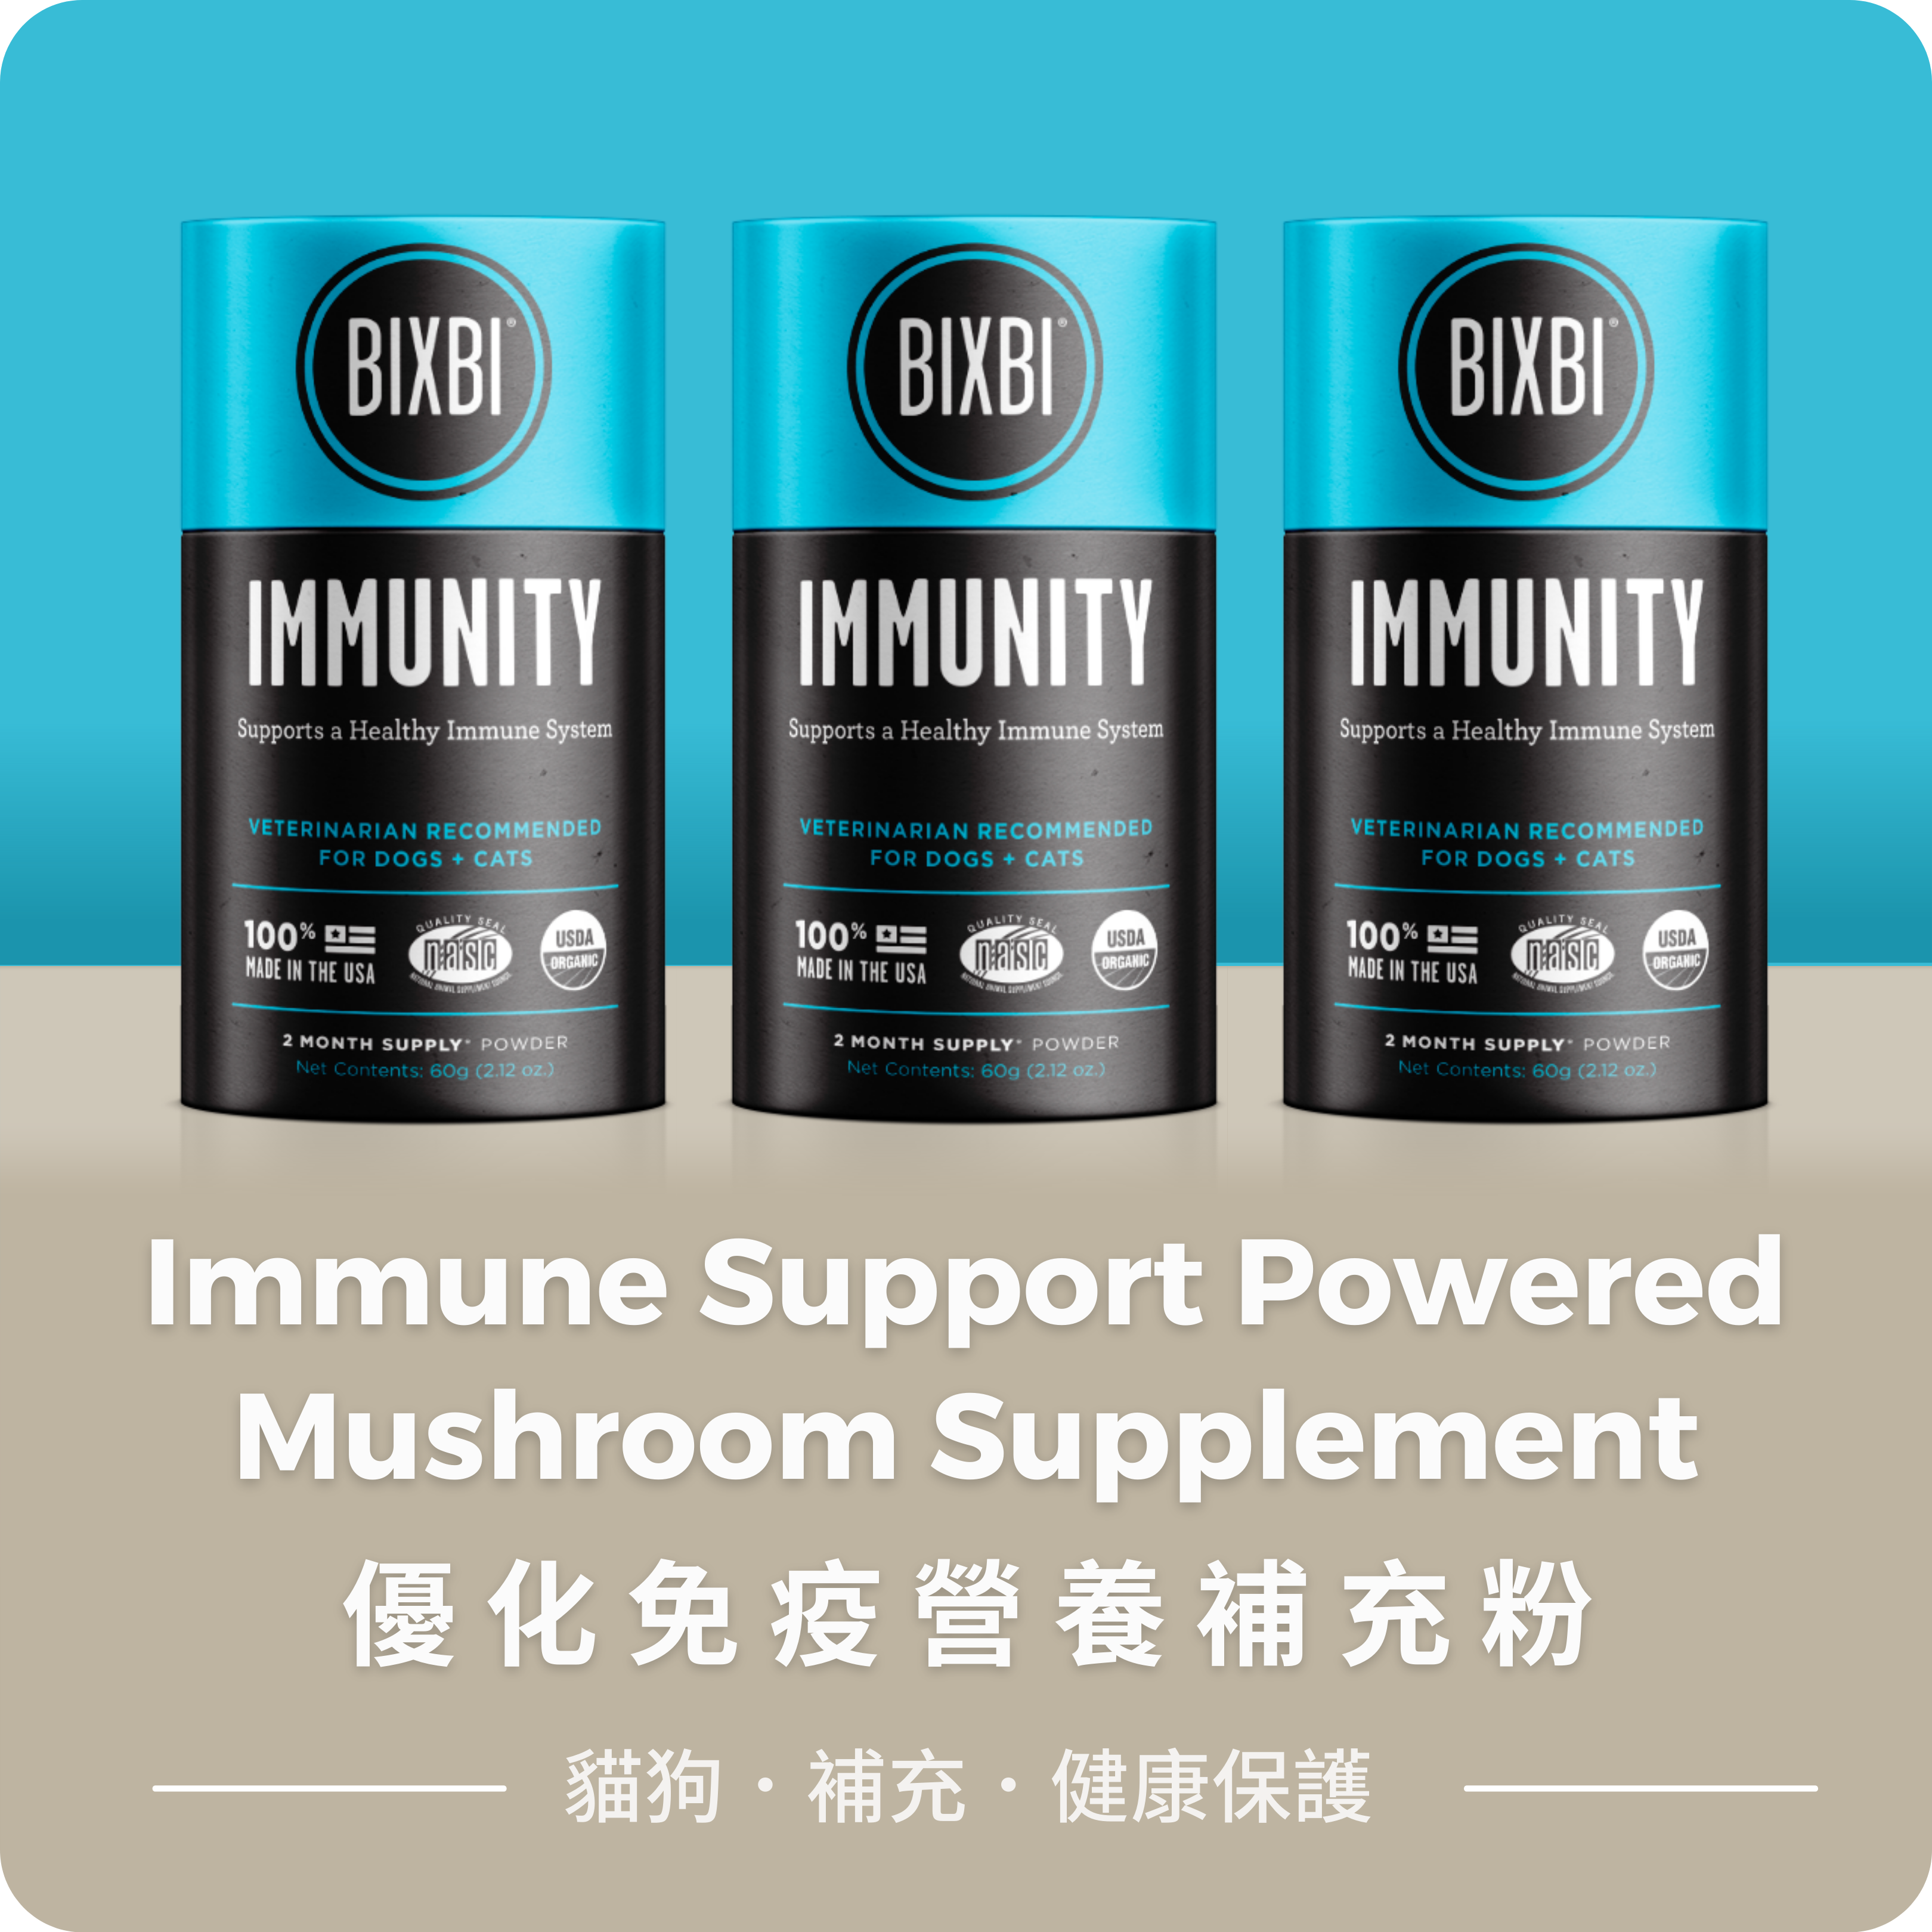 Immune Support Powdered Mushroom Supplement 優化免疫營養補充粉